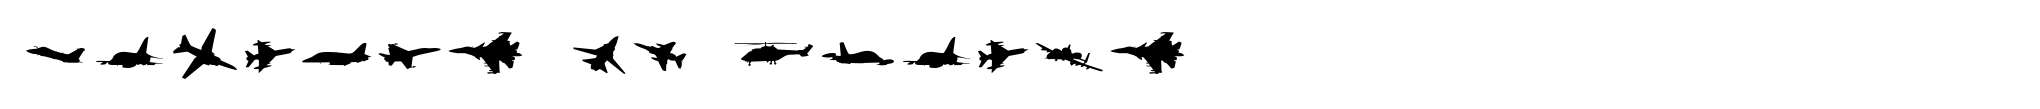 Wingbat OT-Flight image